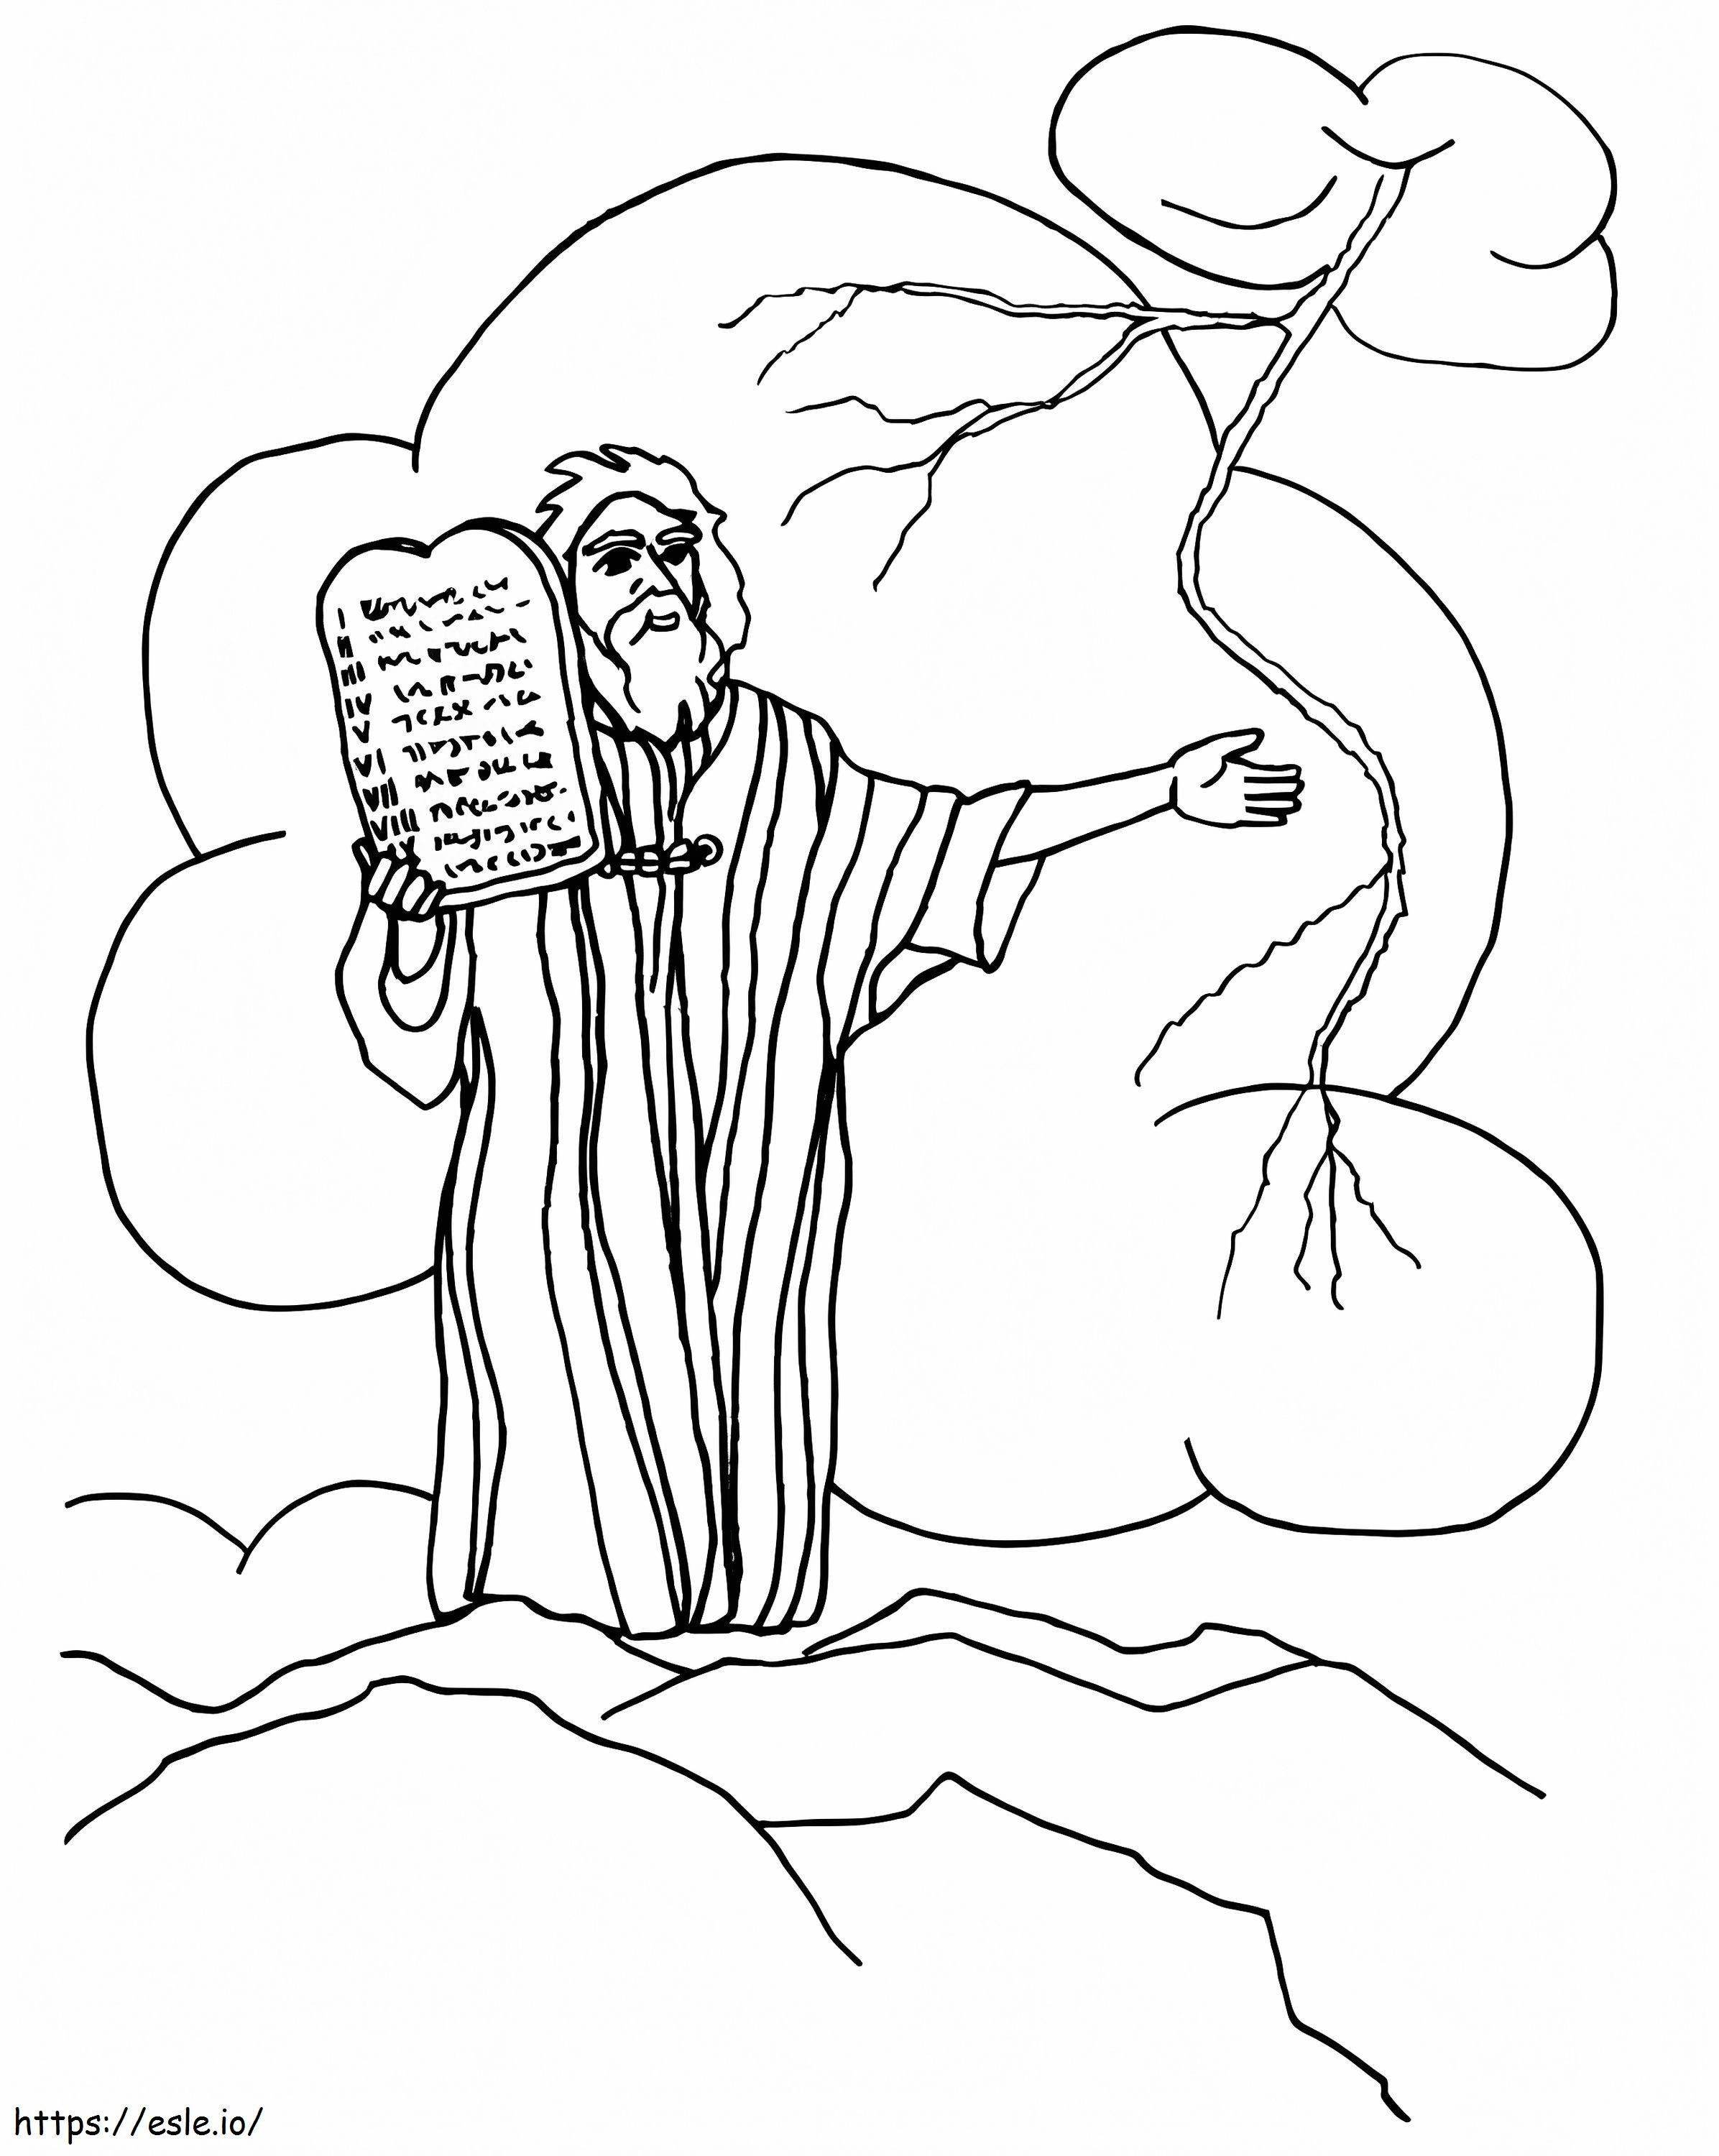 Ten Commandments 5 coloring page